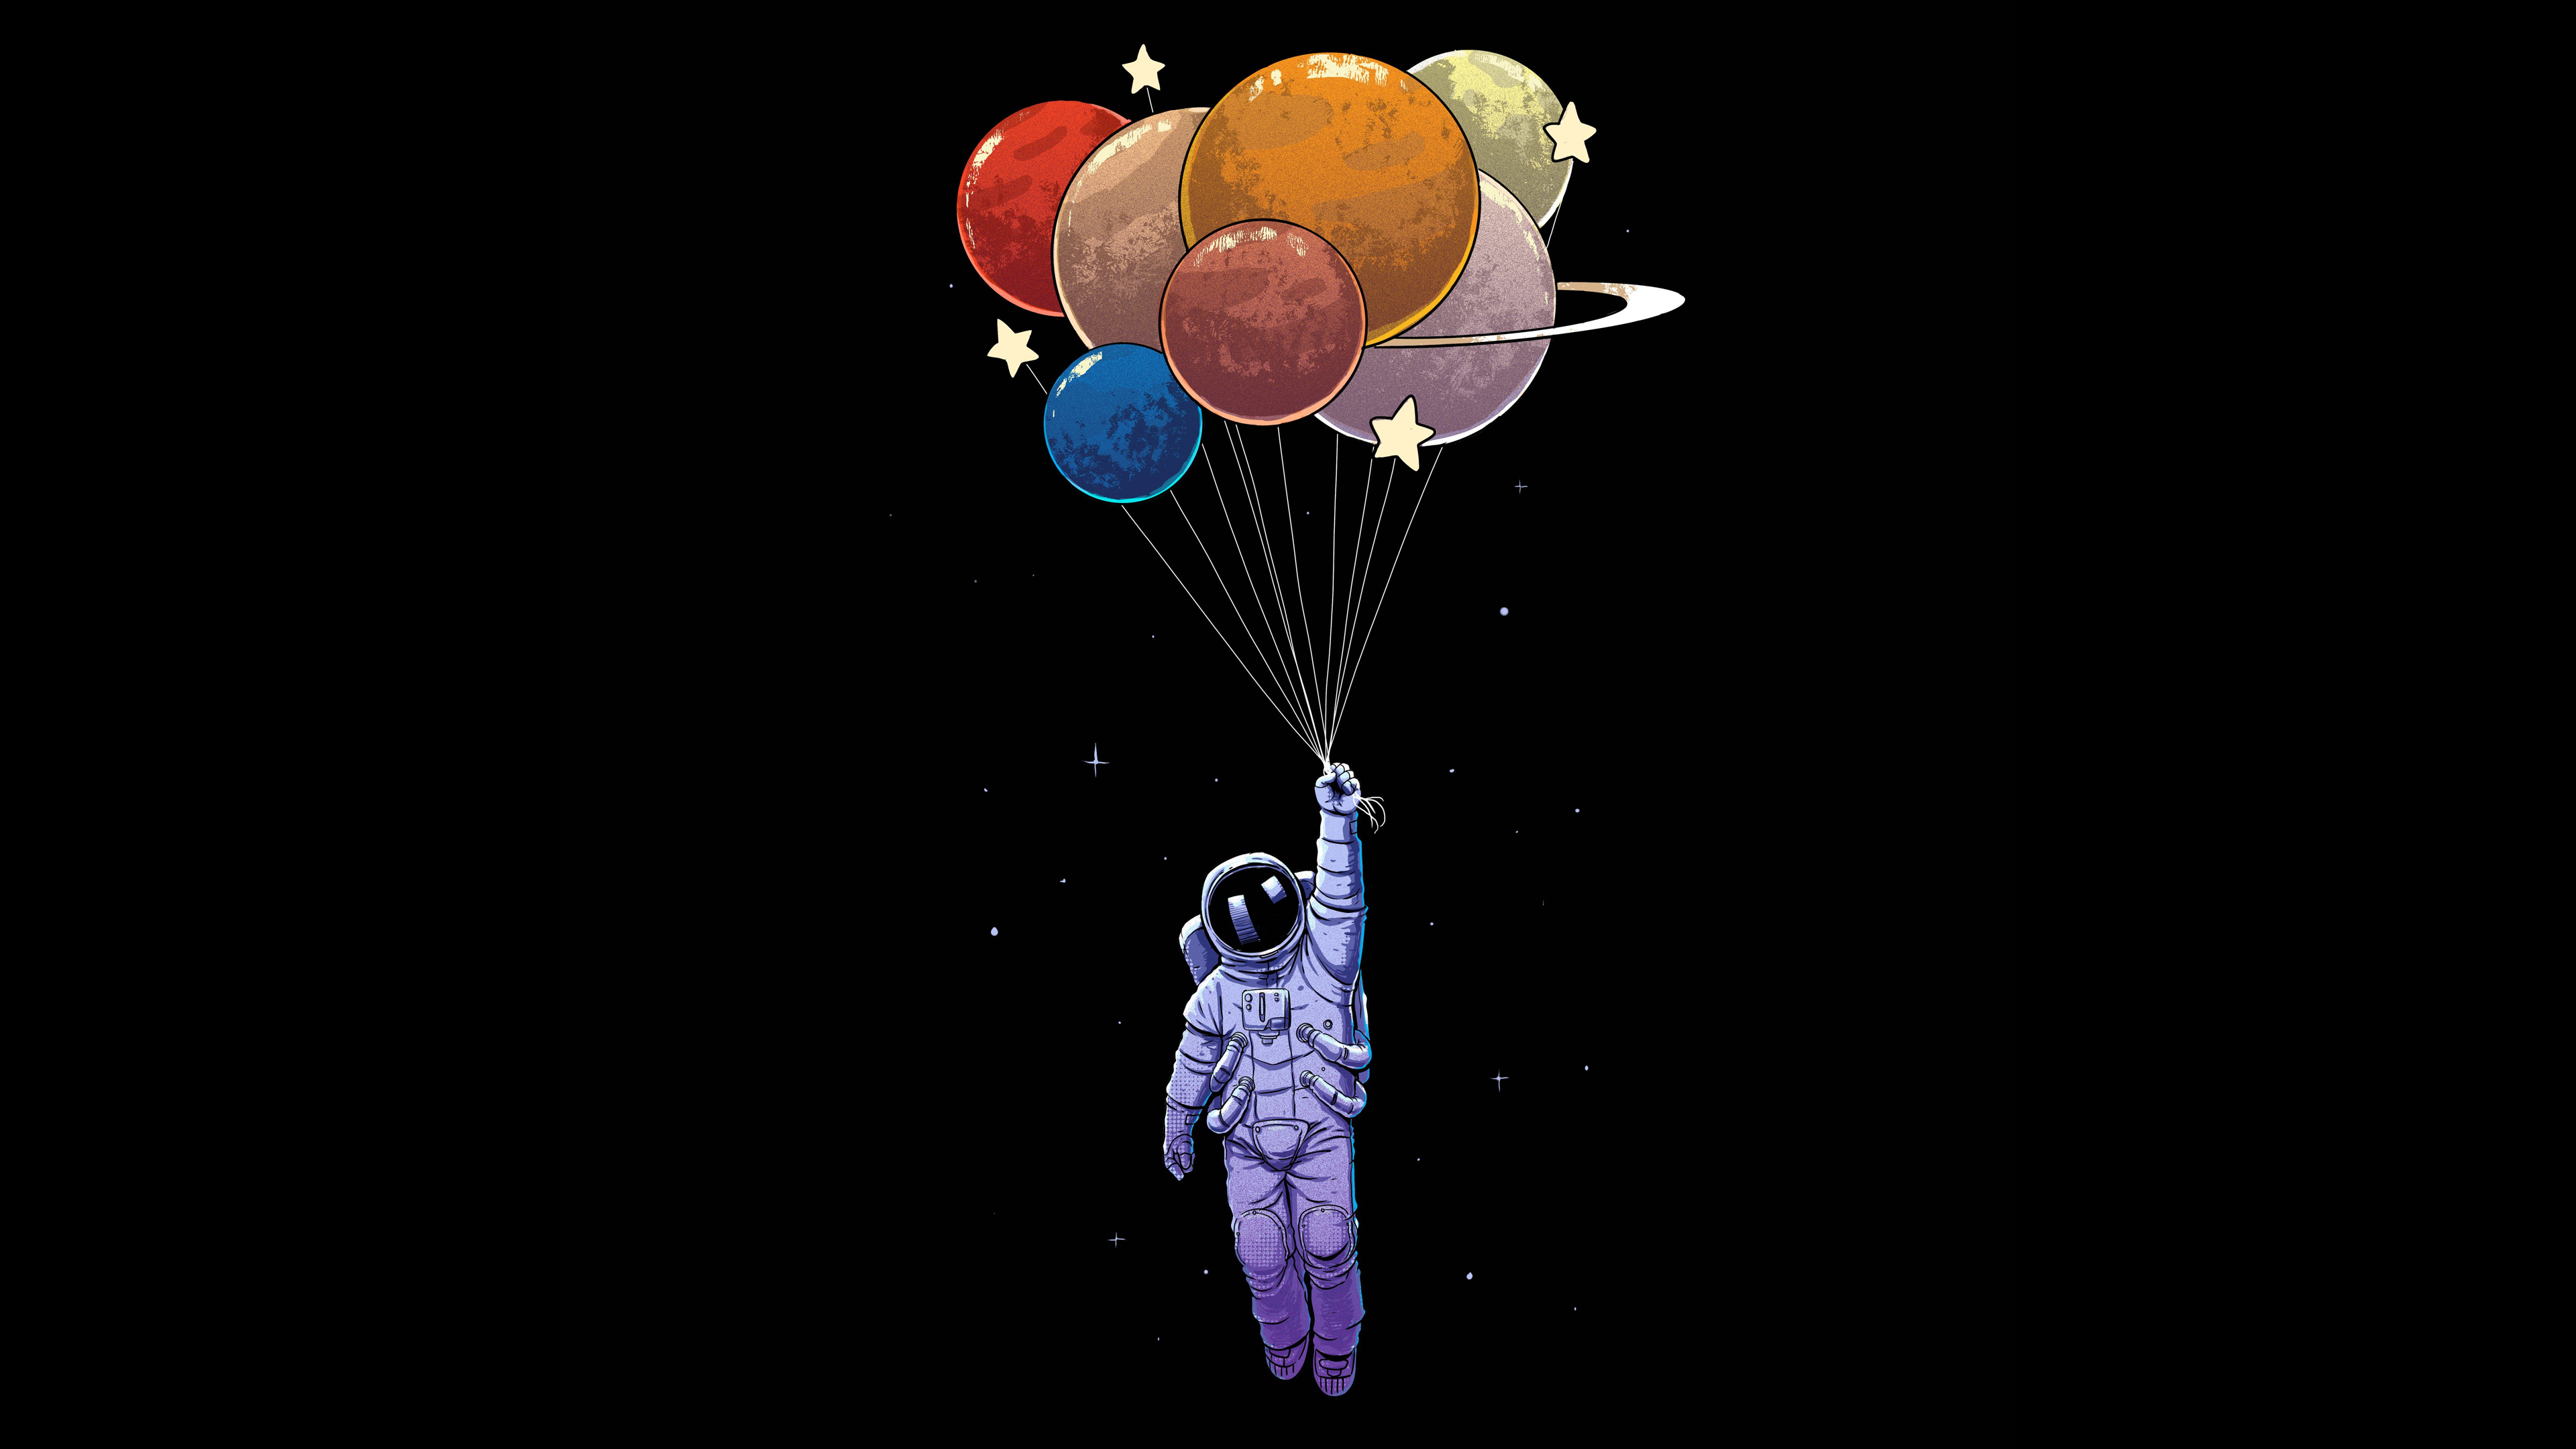 Astronaut Balloon Colorful Planet Spacesuit 3840x2160